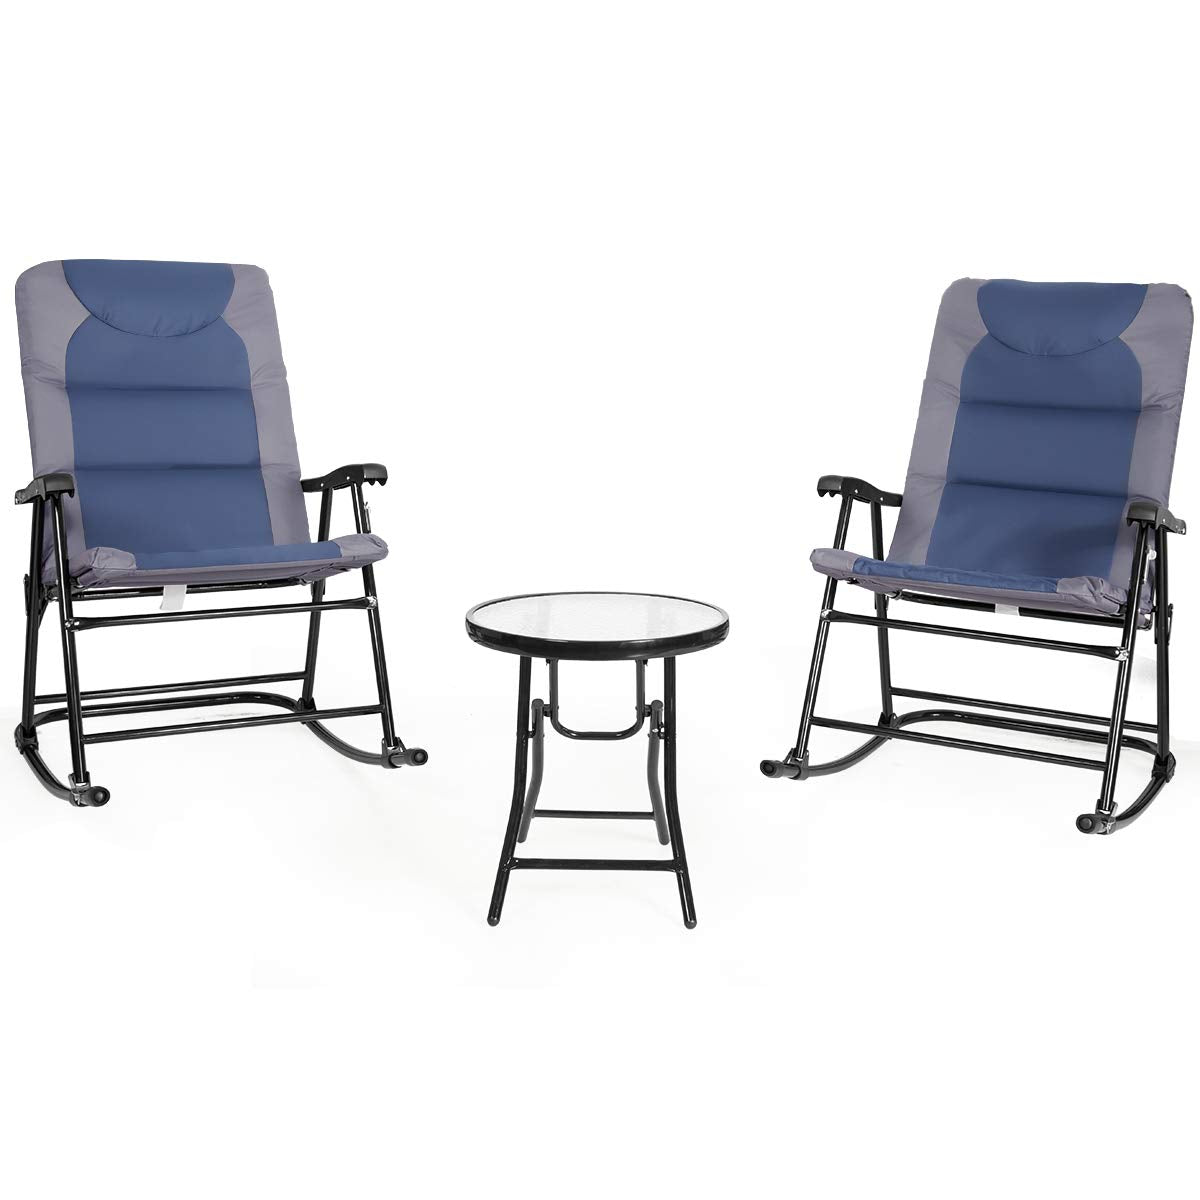 Giantex 3 PCS Folding Bistro Set Outdoor Patio Rocking Chairs Round Table Set 2 Rocking Chairs